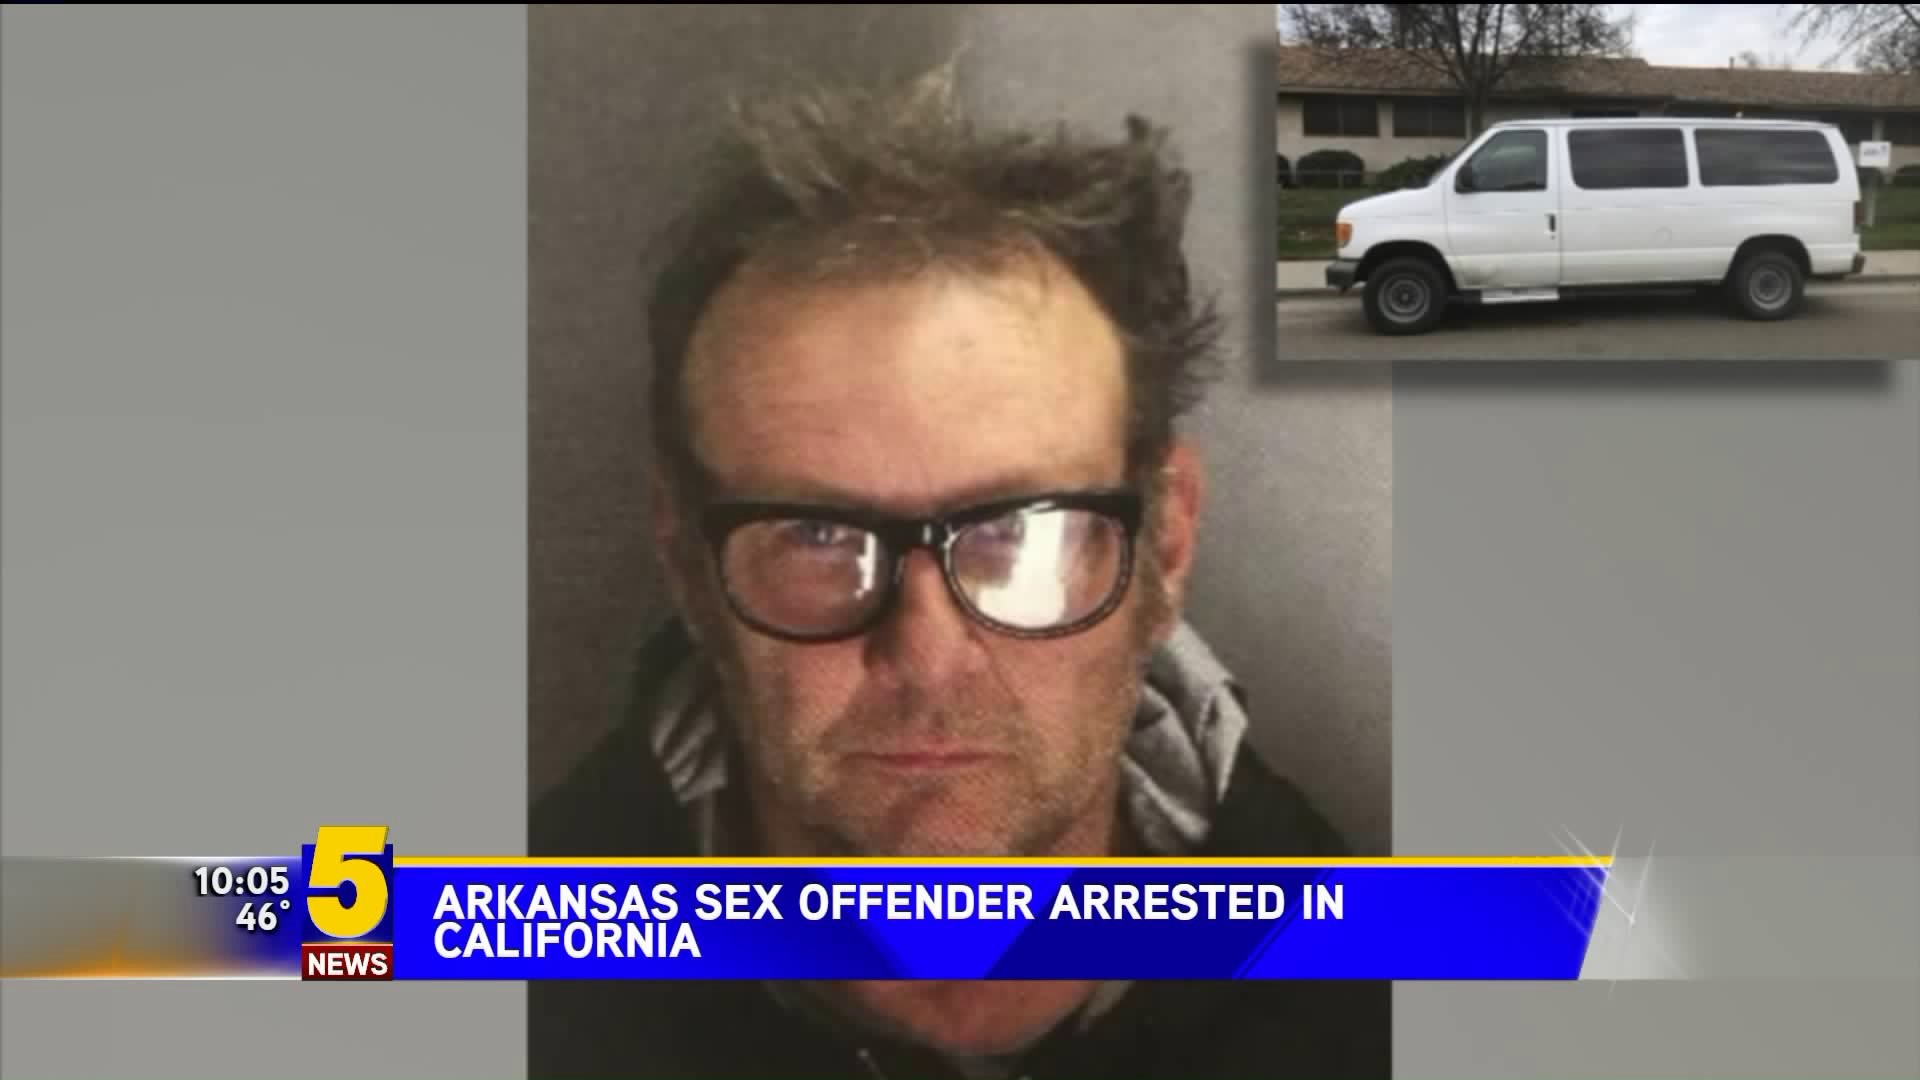 Arkansas Sex Offender Arrested In California